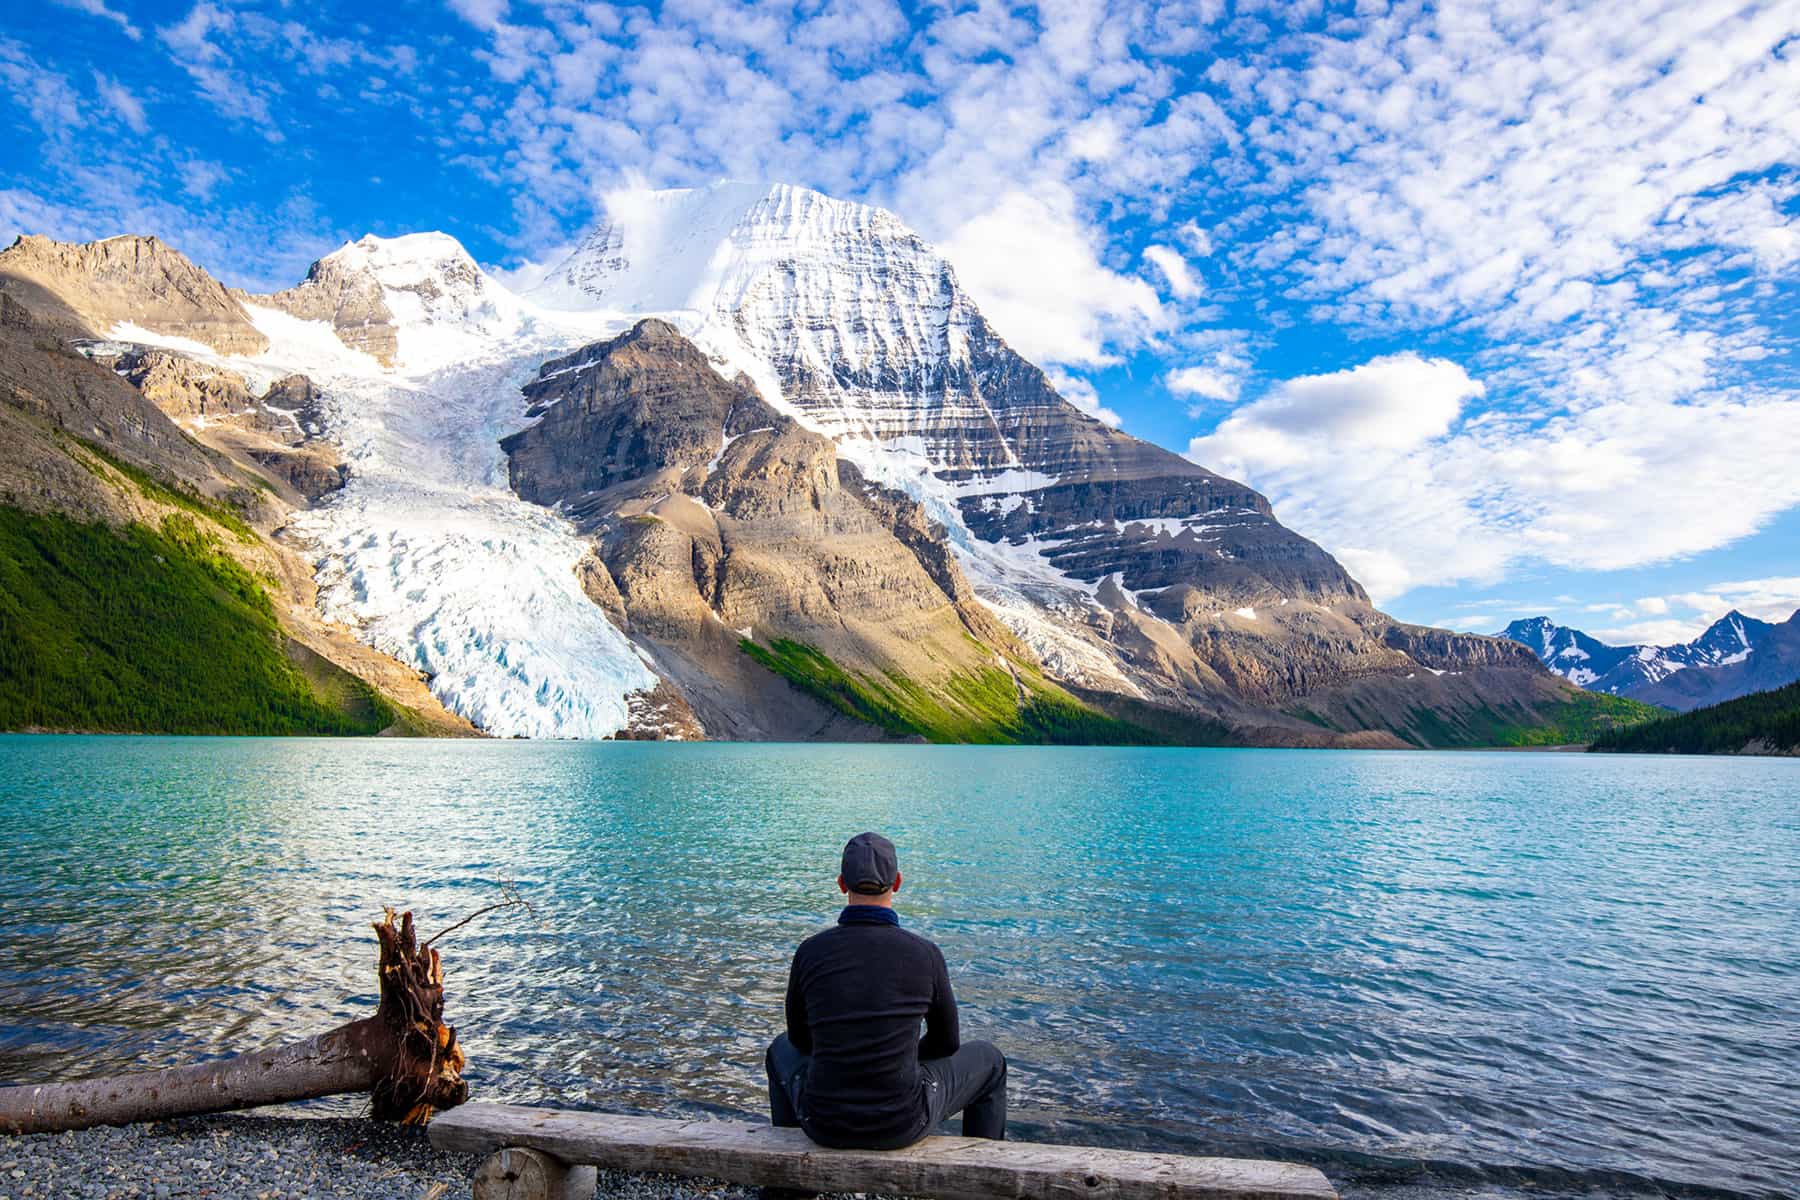 Man contemplating lake and mountains